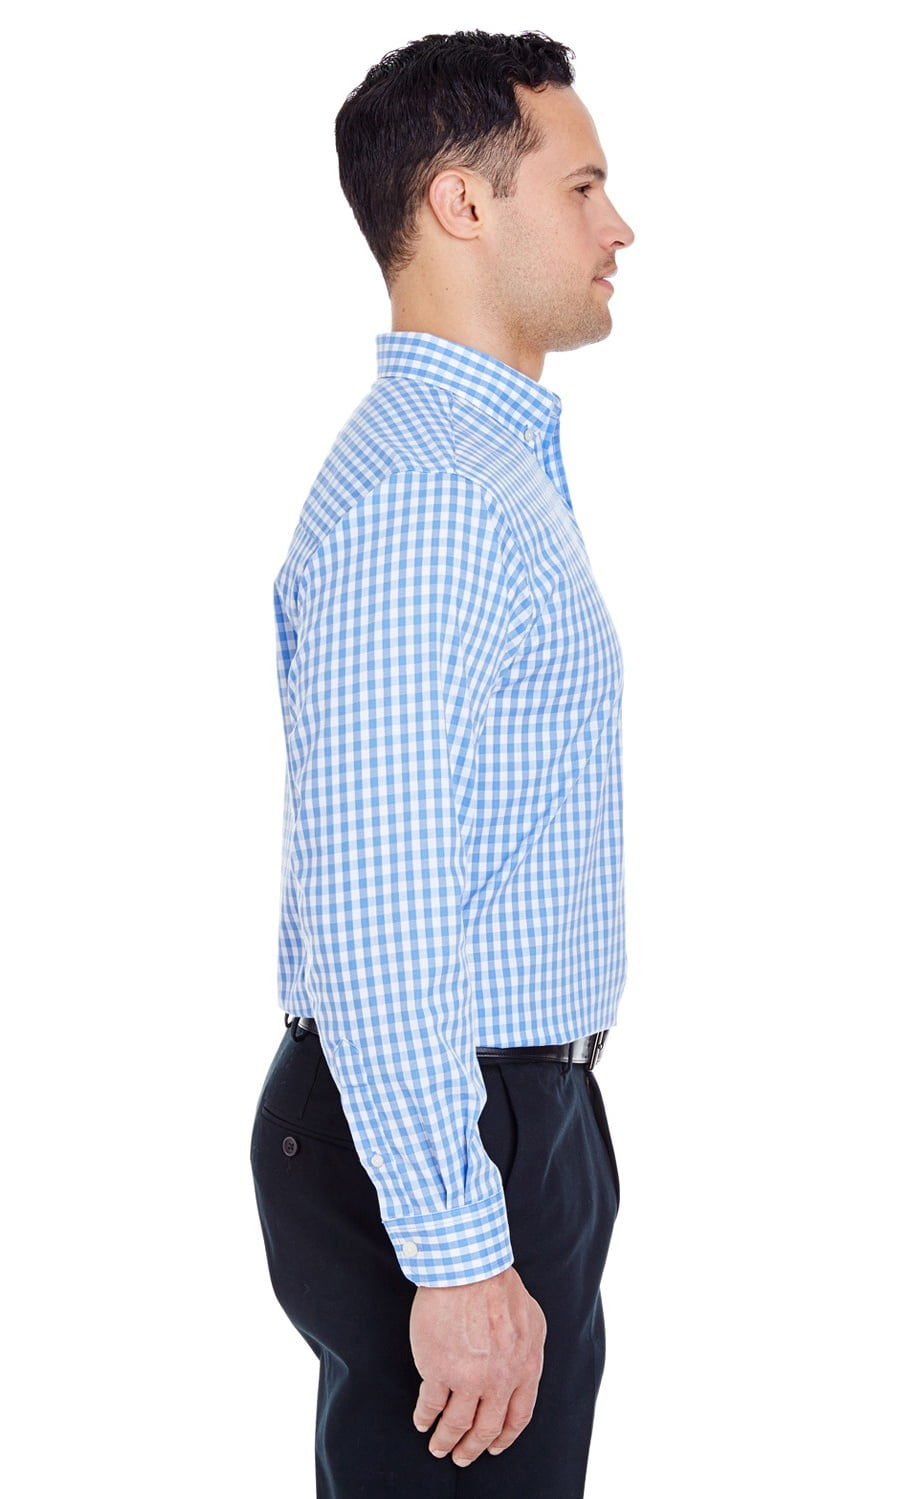 New UltraClub Men's Medium-Check Woven LongSleeve Button Down Gingham Shirt 8385